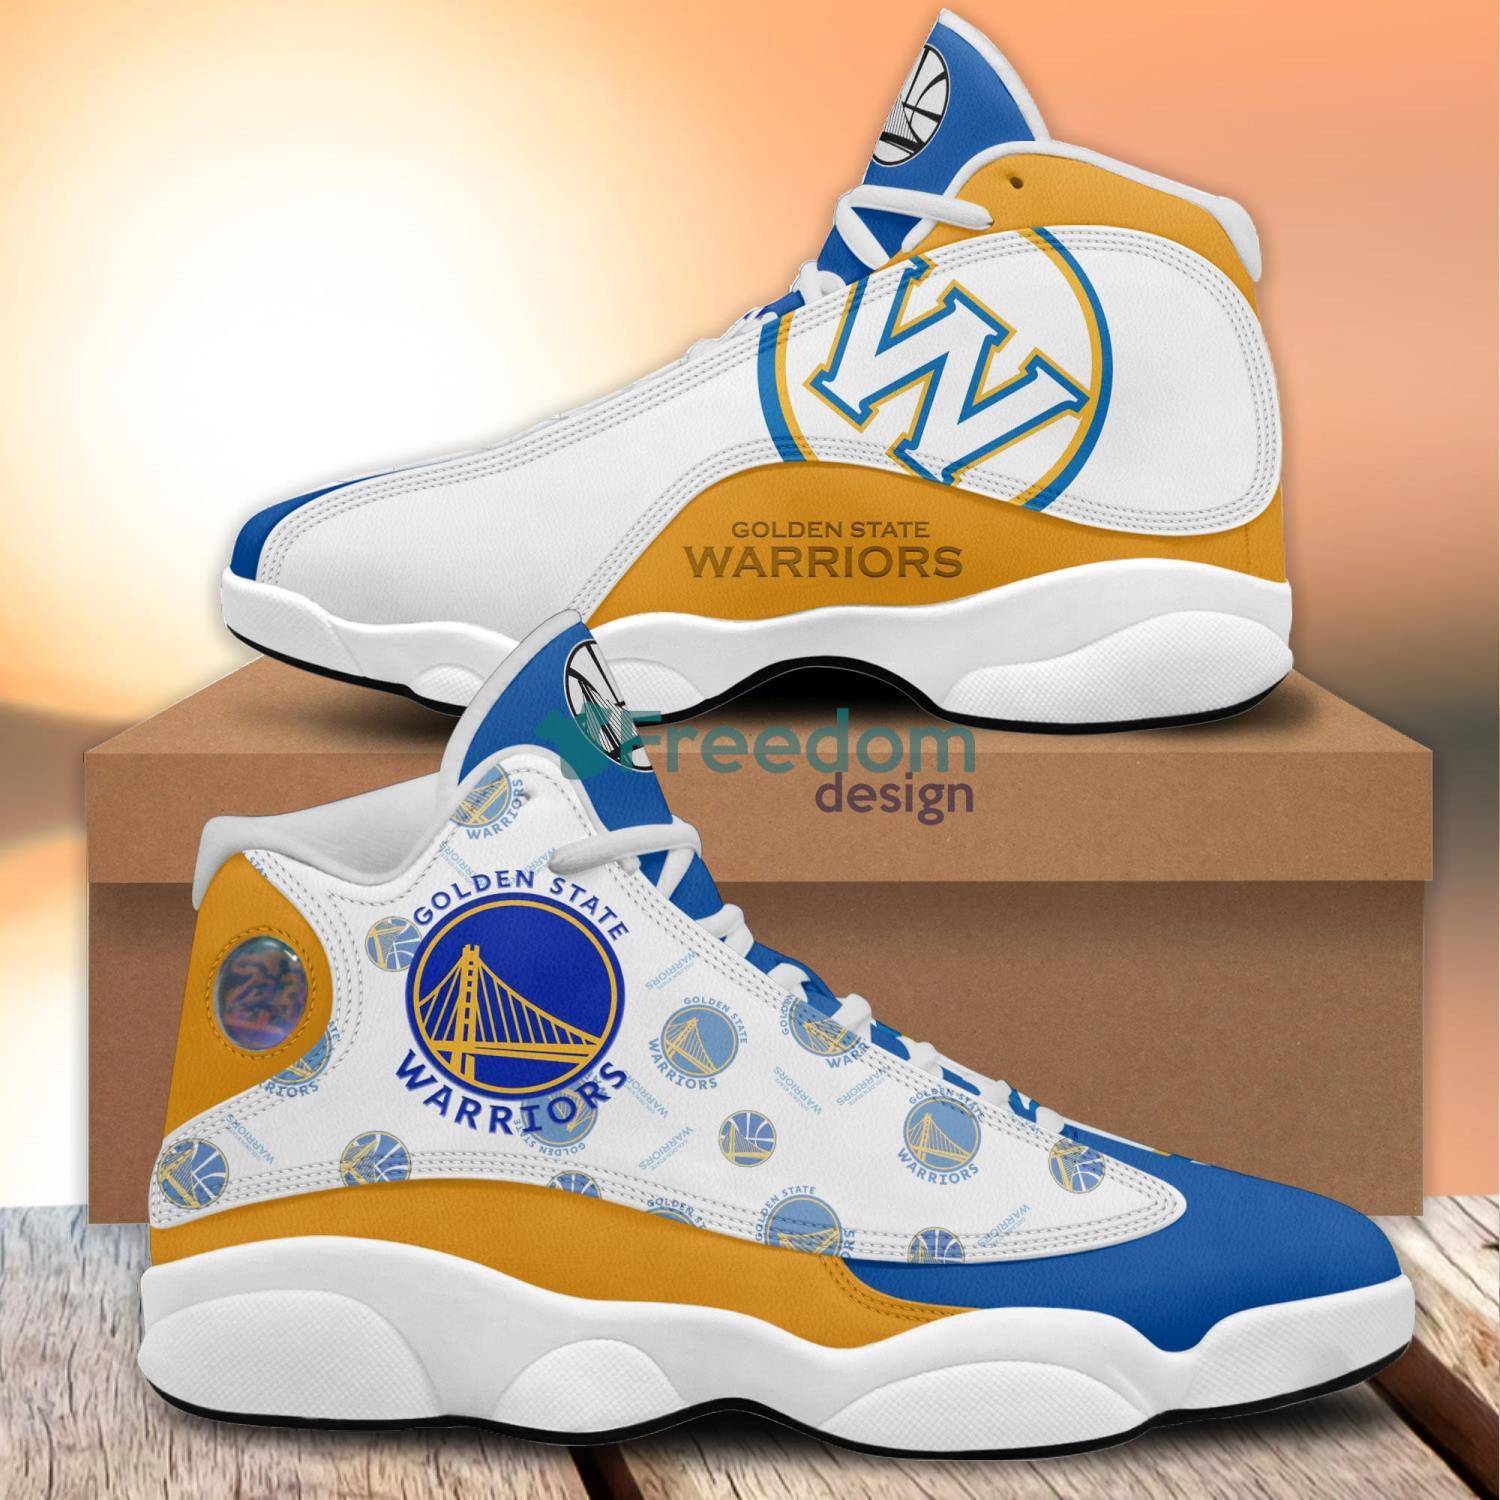 golden state warriors basketball shoes